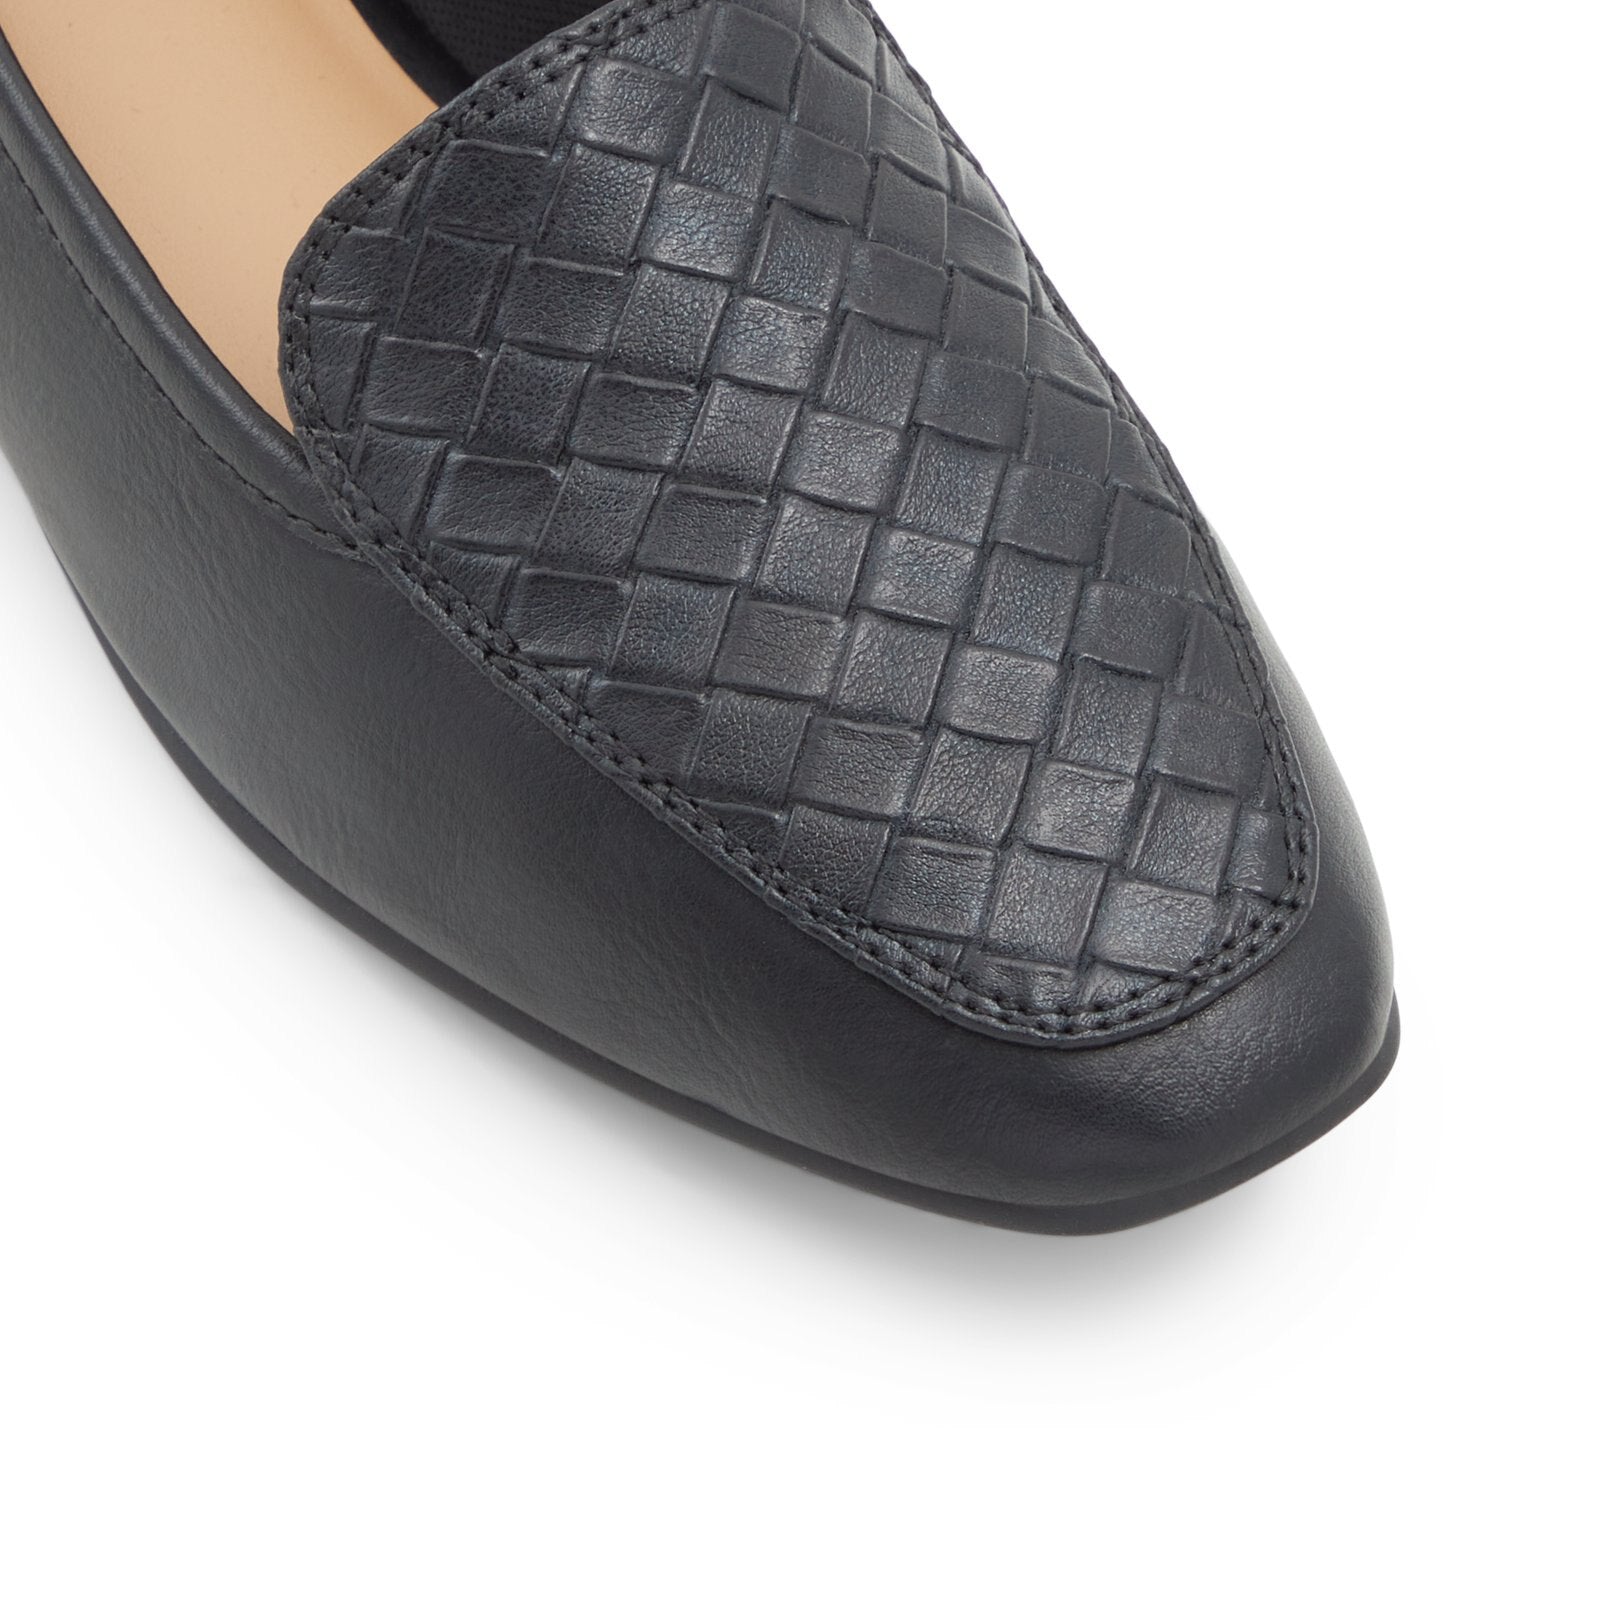 Joliee Women Shoes - Black - CALL IT SPRING KSA